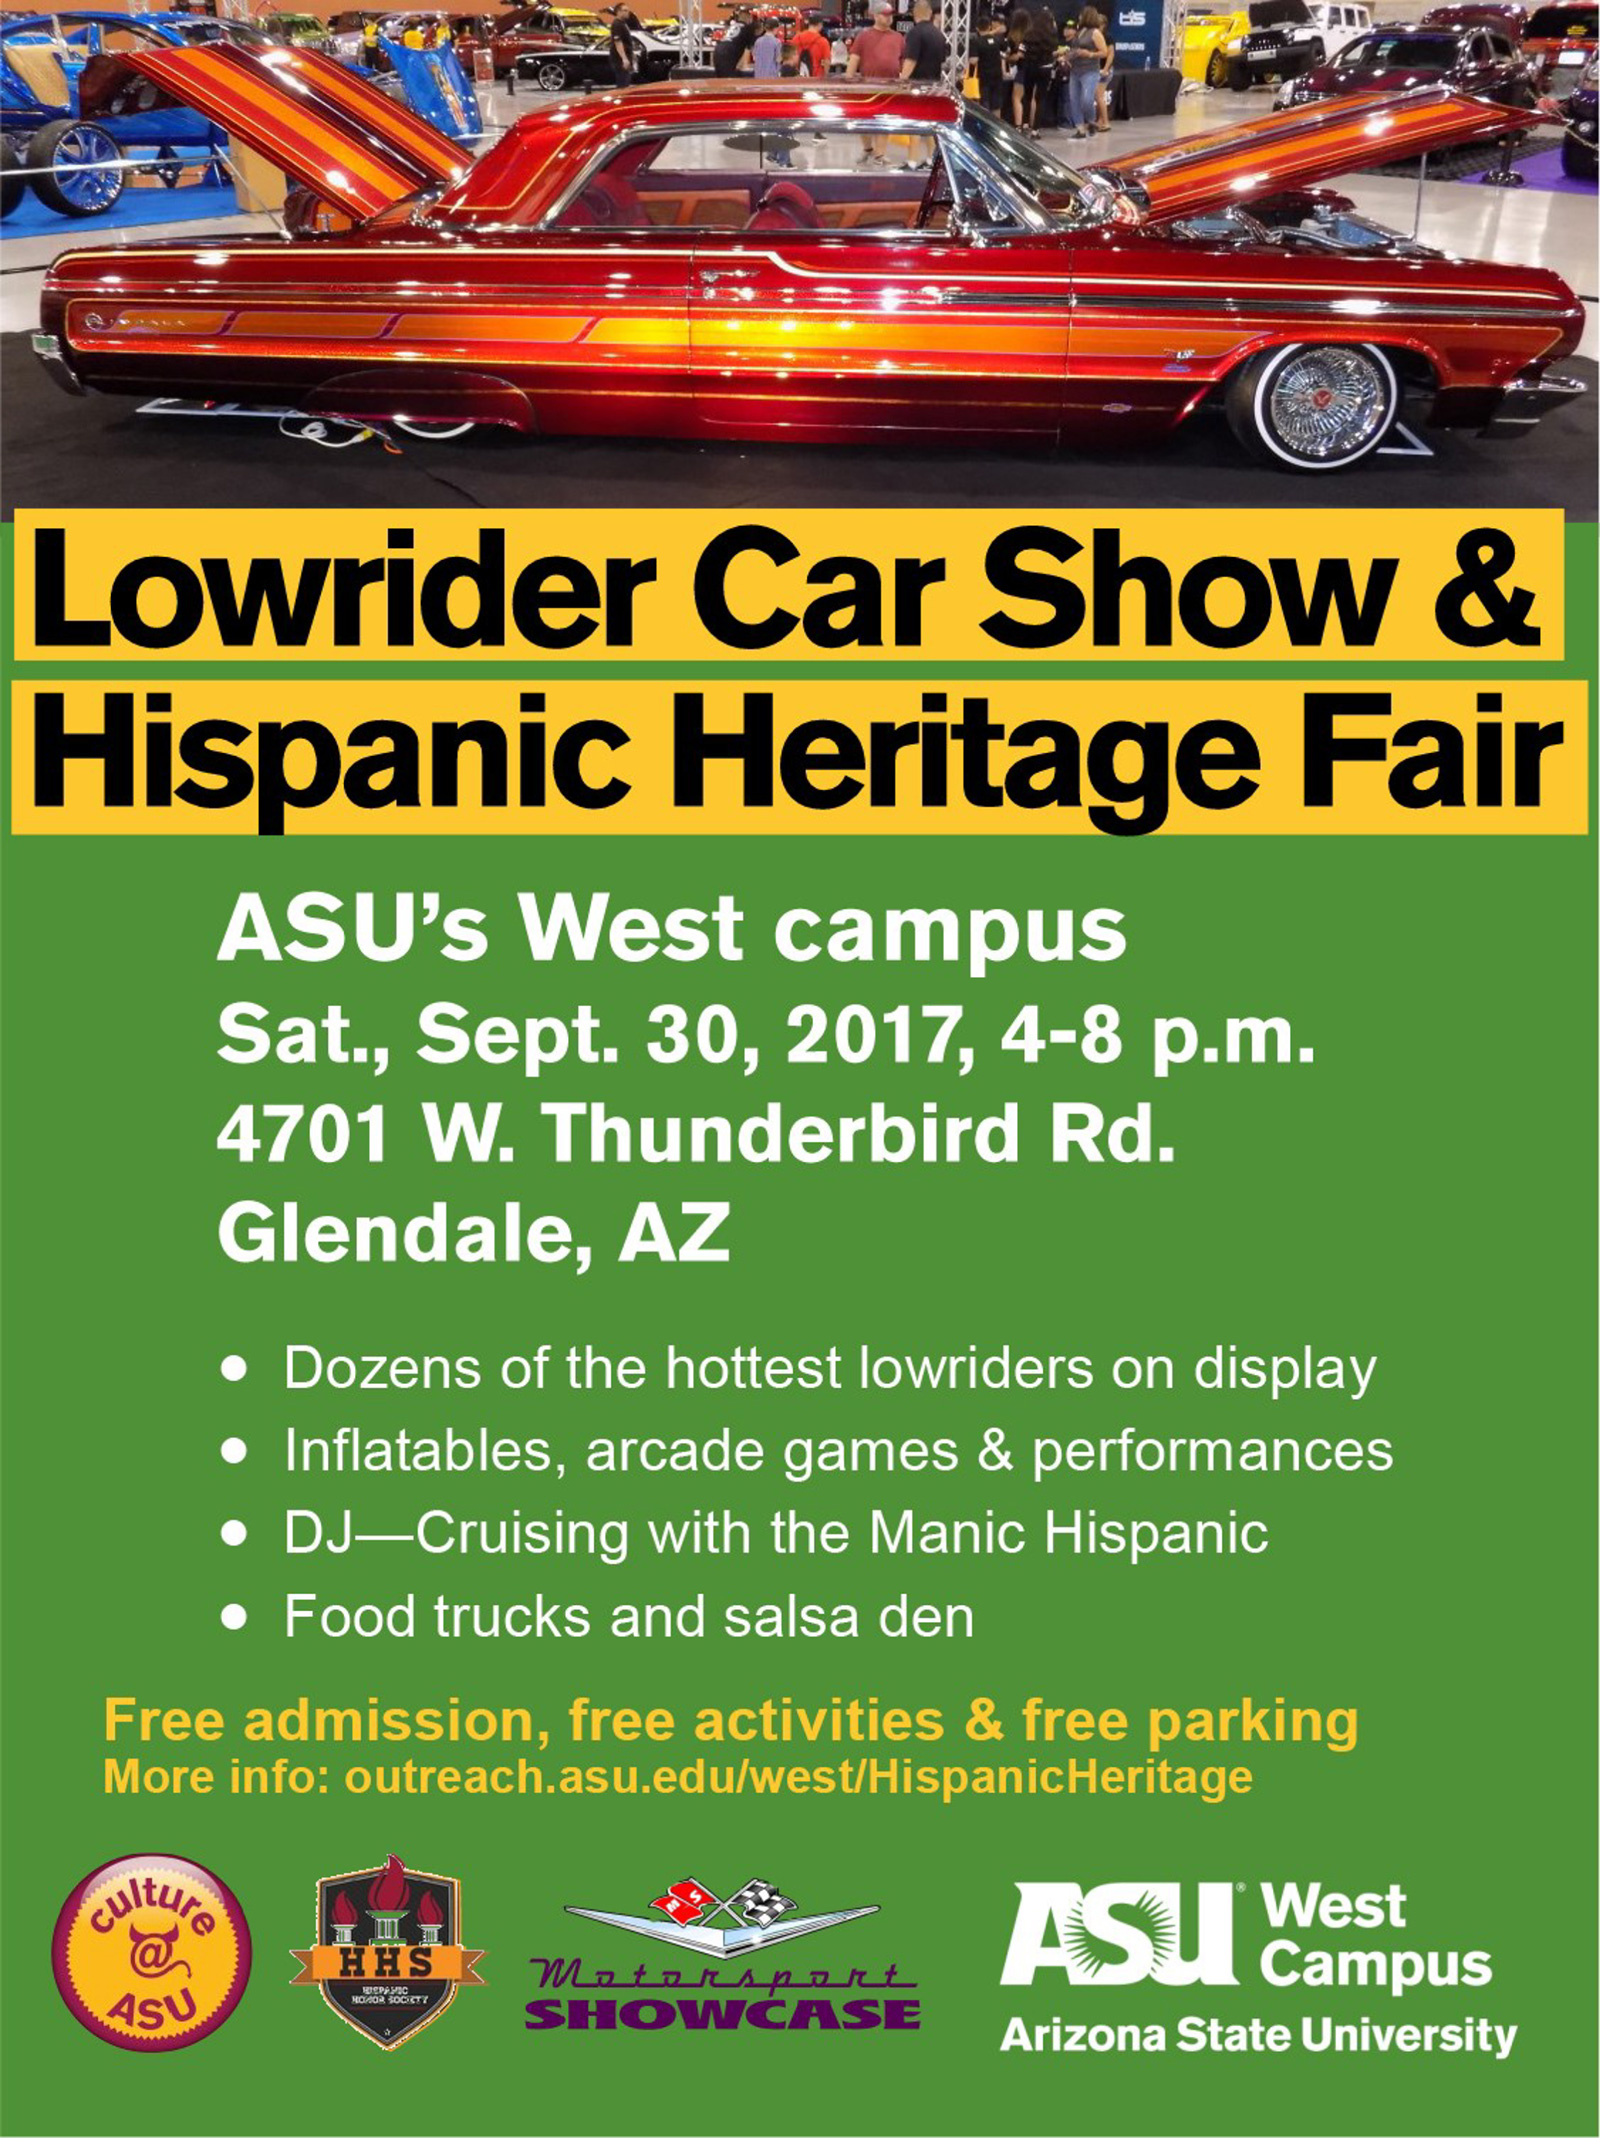 Lowrider Car Show and Hispanic Heritage Fair ASU Events